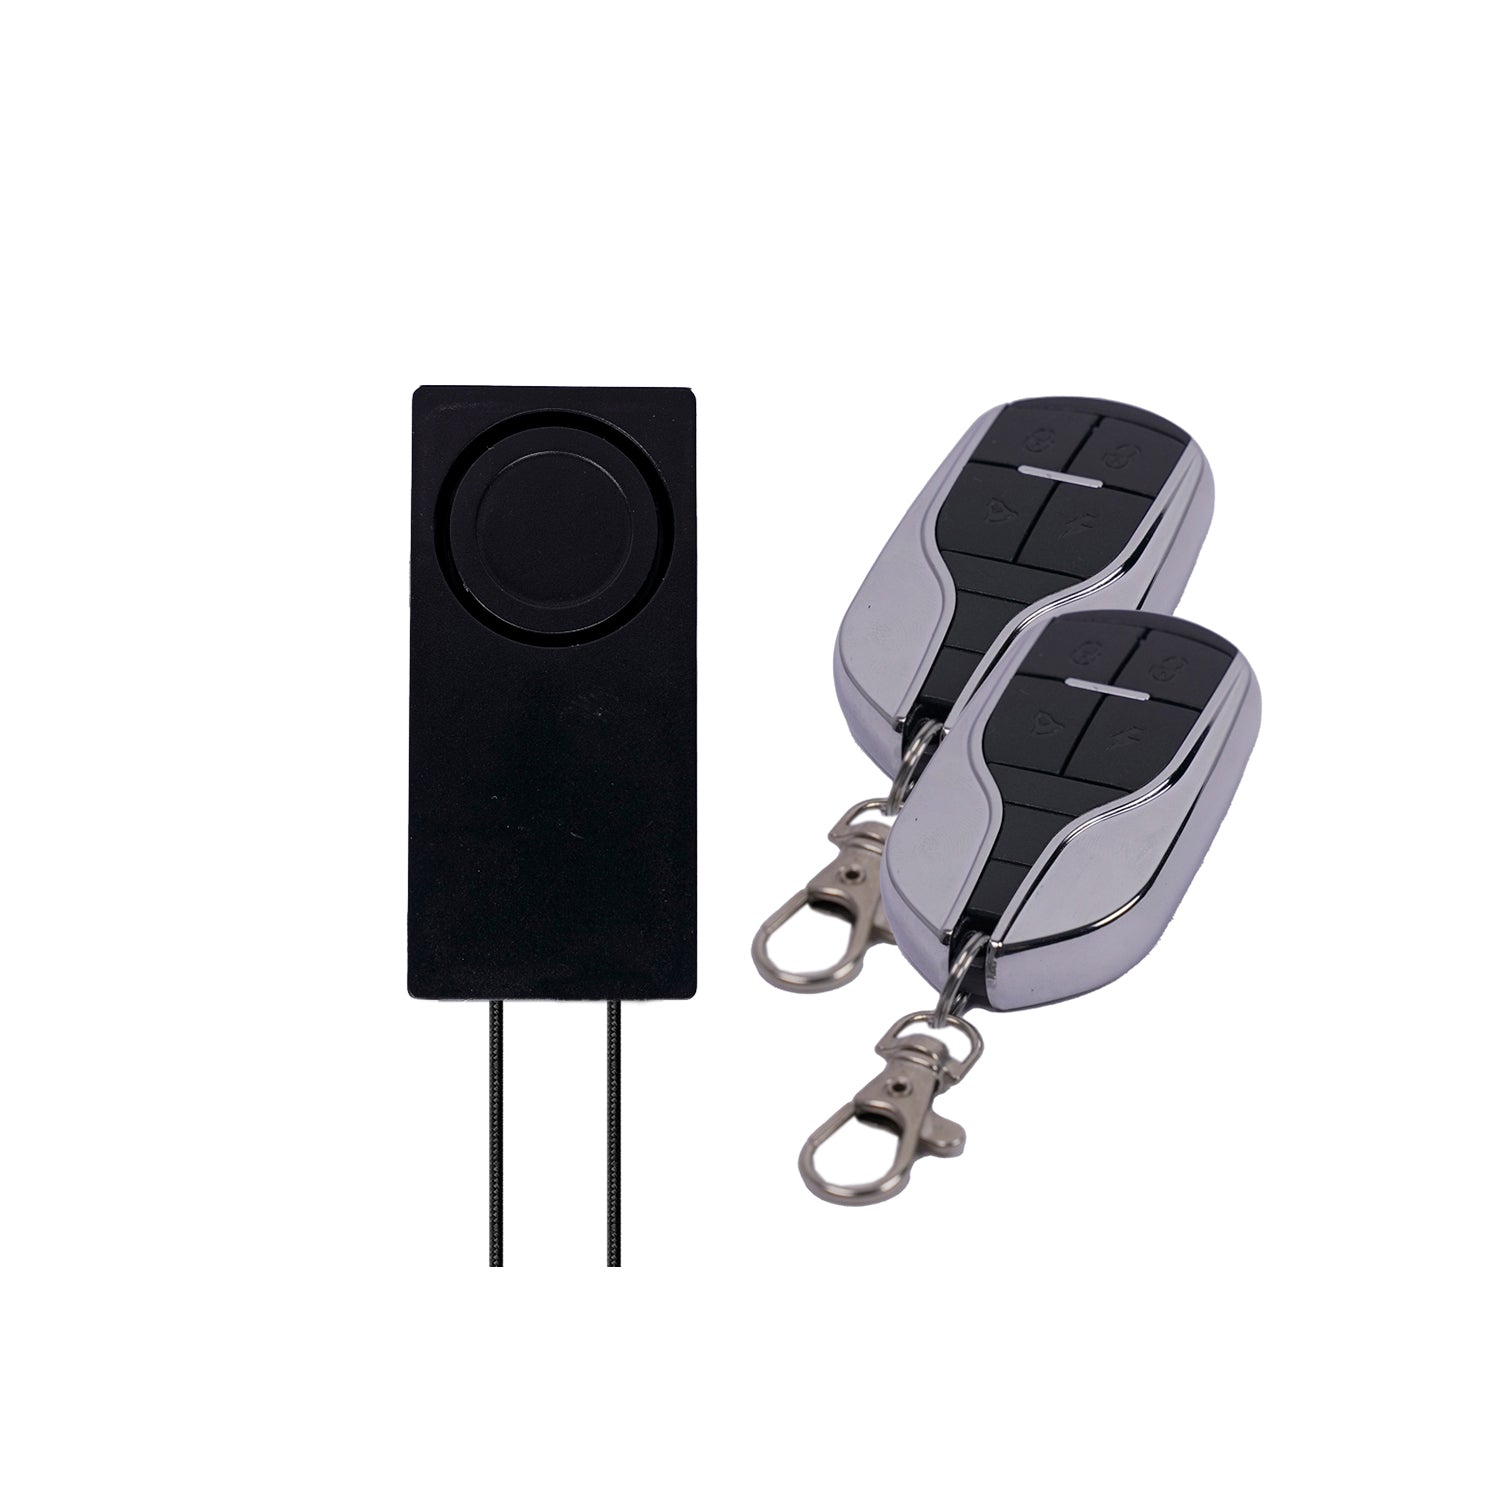 Inokim OXO/ OX remote alarm kit with anti-theft control